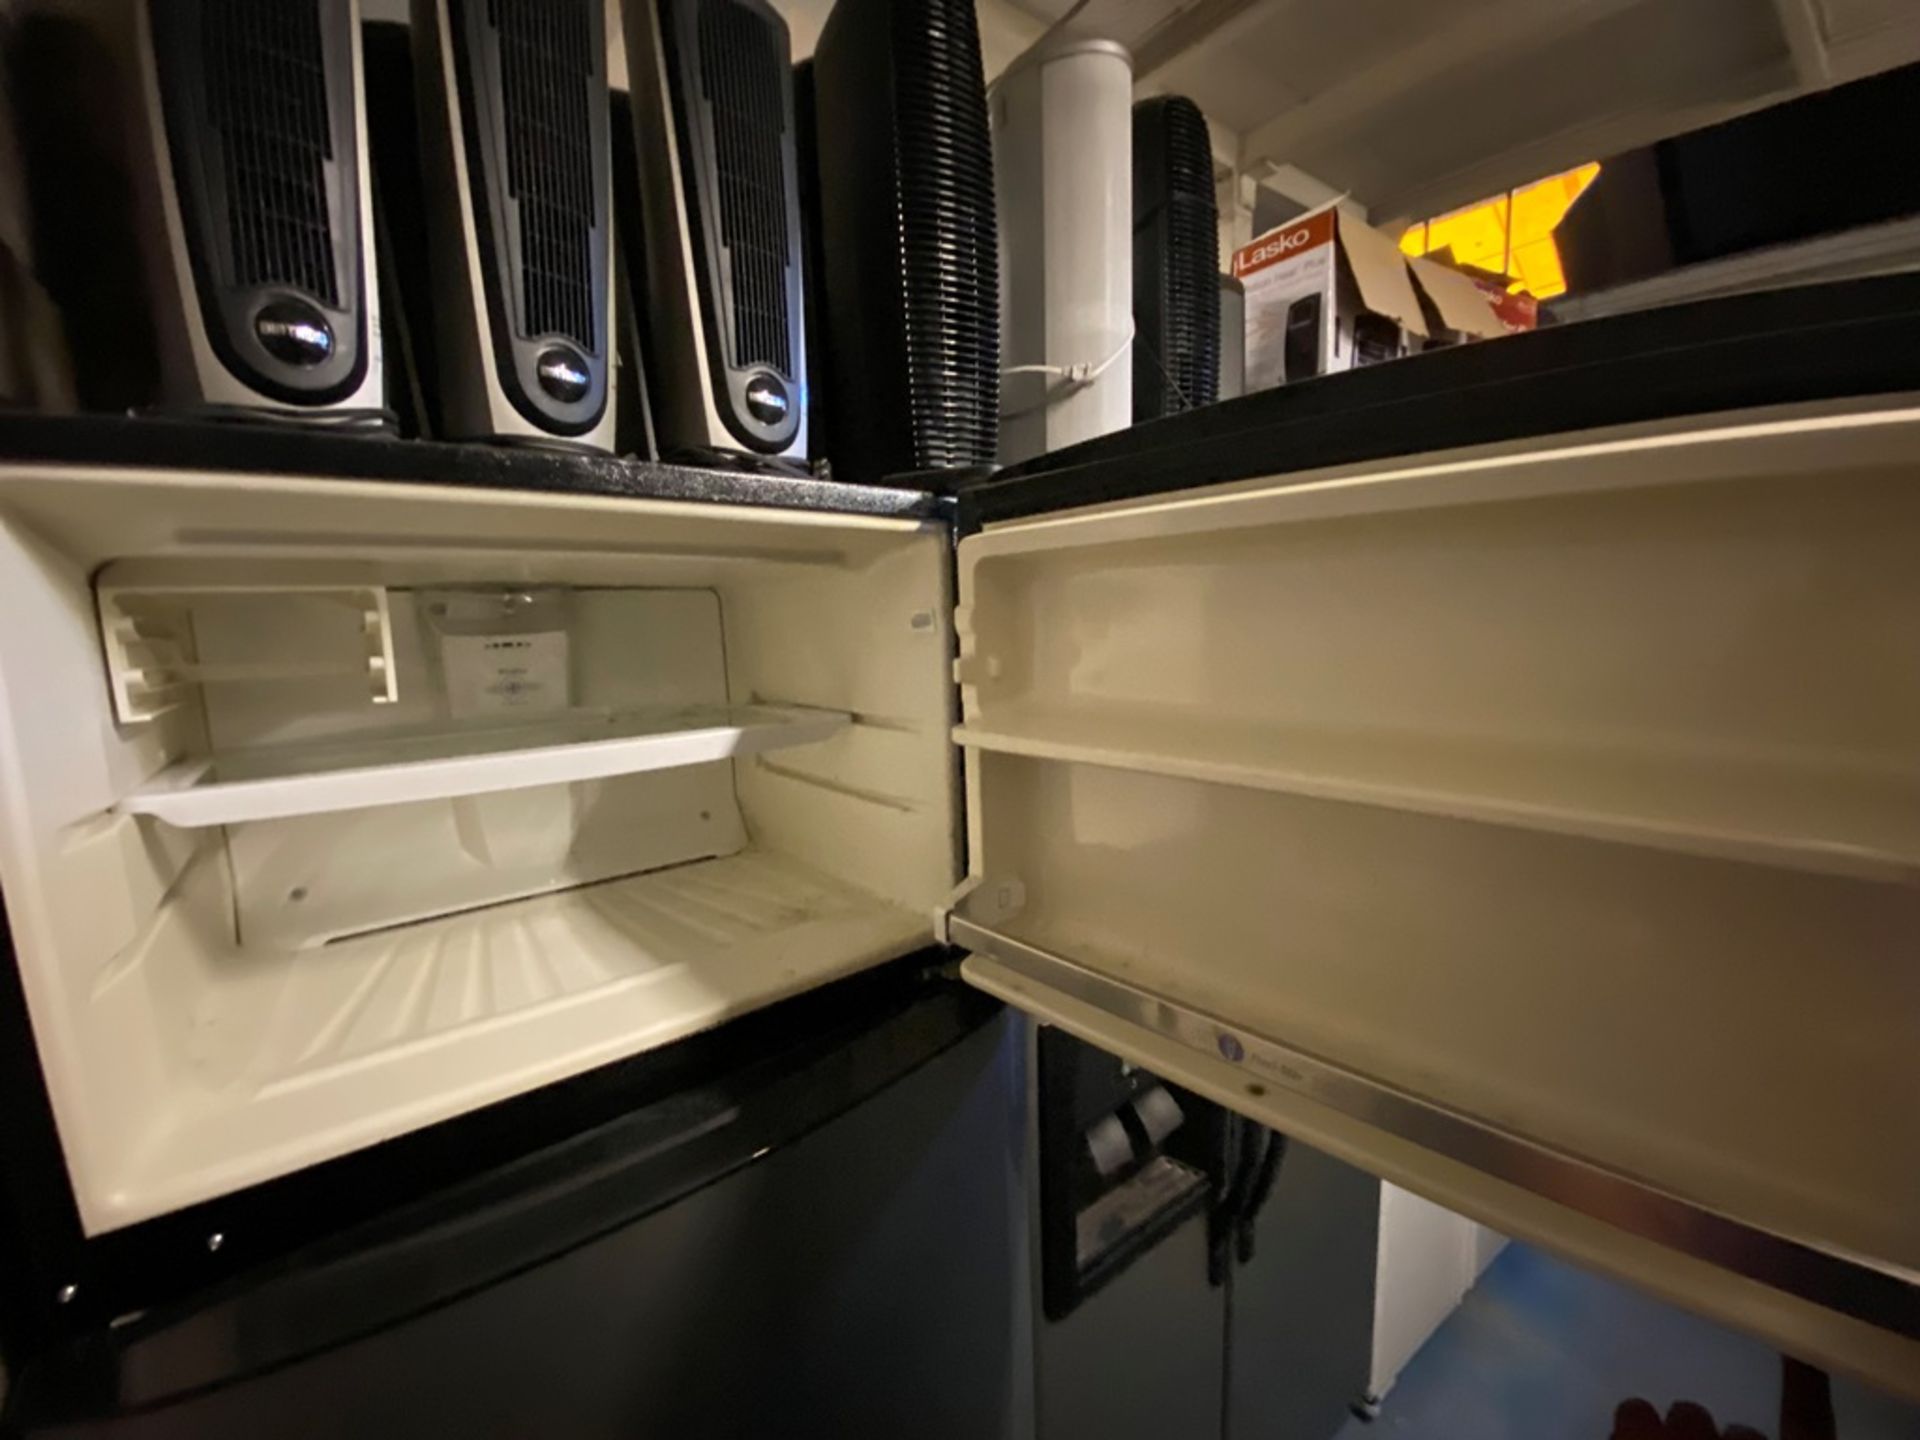 Refrigerador marca Whirlpool Modelo WT8001D Serie VSY2841609, Color gris, detalles estéticos, Favor - Image 7 of 11